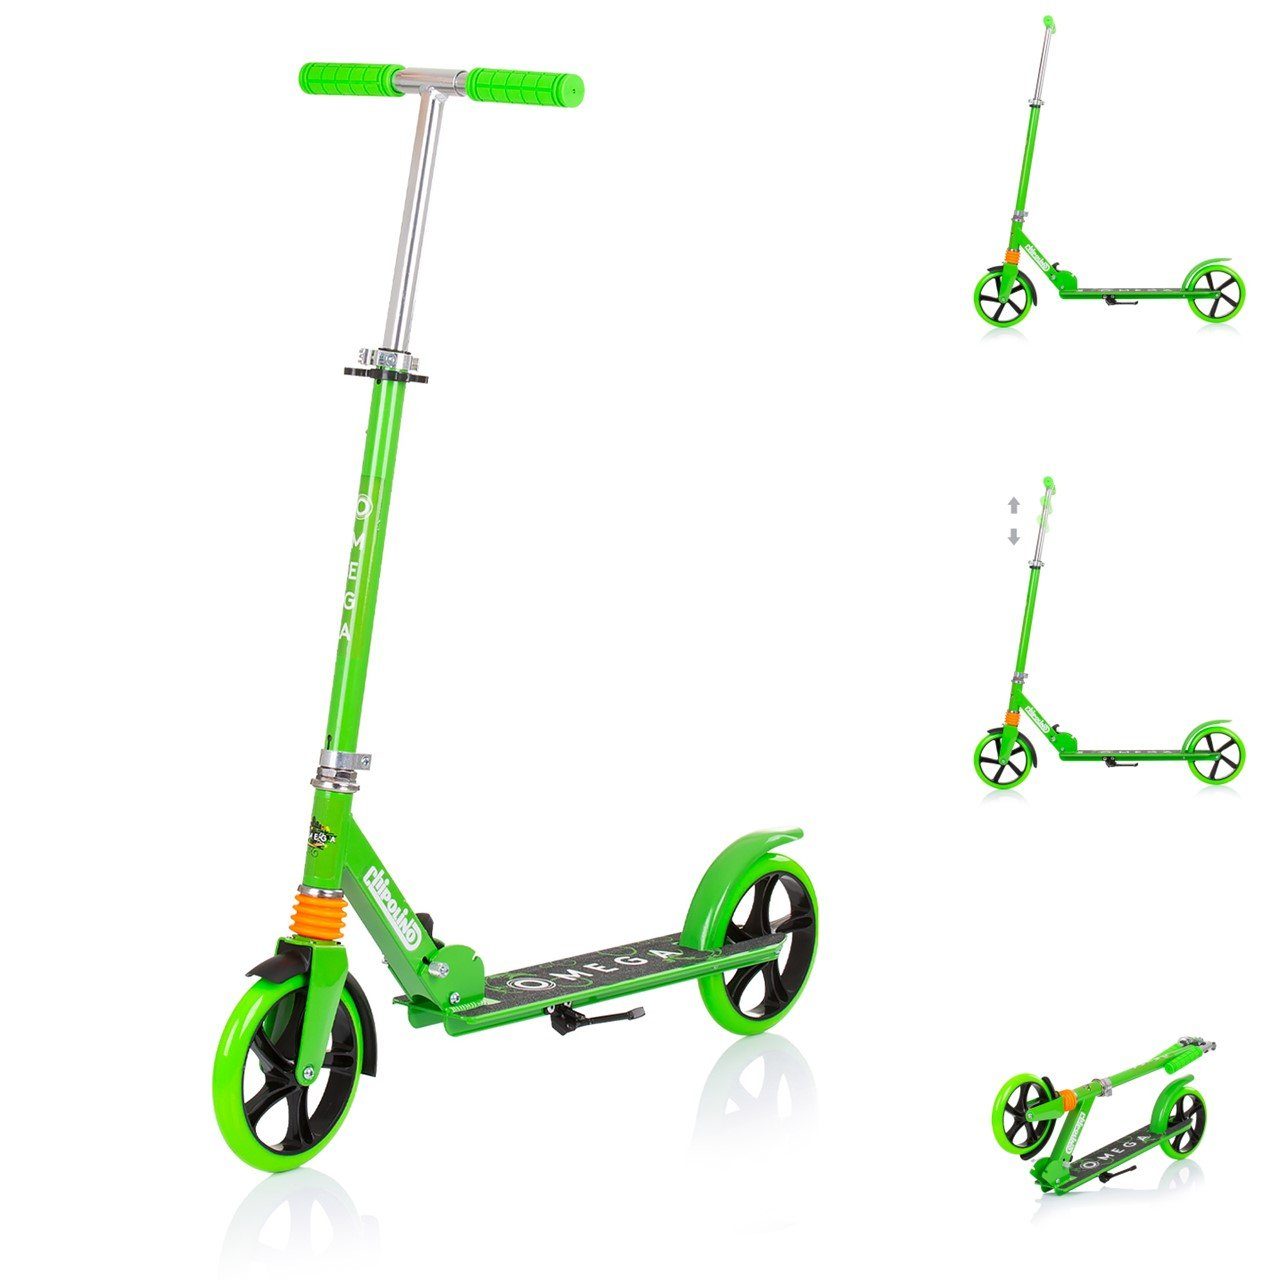 Chipolino Cityroller Kinderroller Omega PU Räder, ABEC-7 Lager verstellbar faltbar Bremse grün